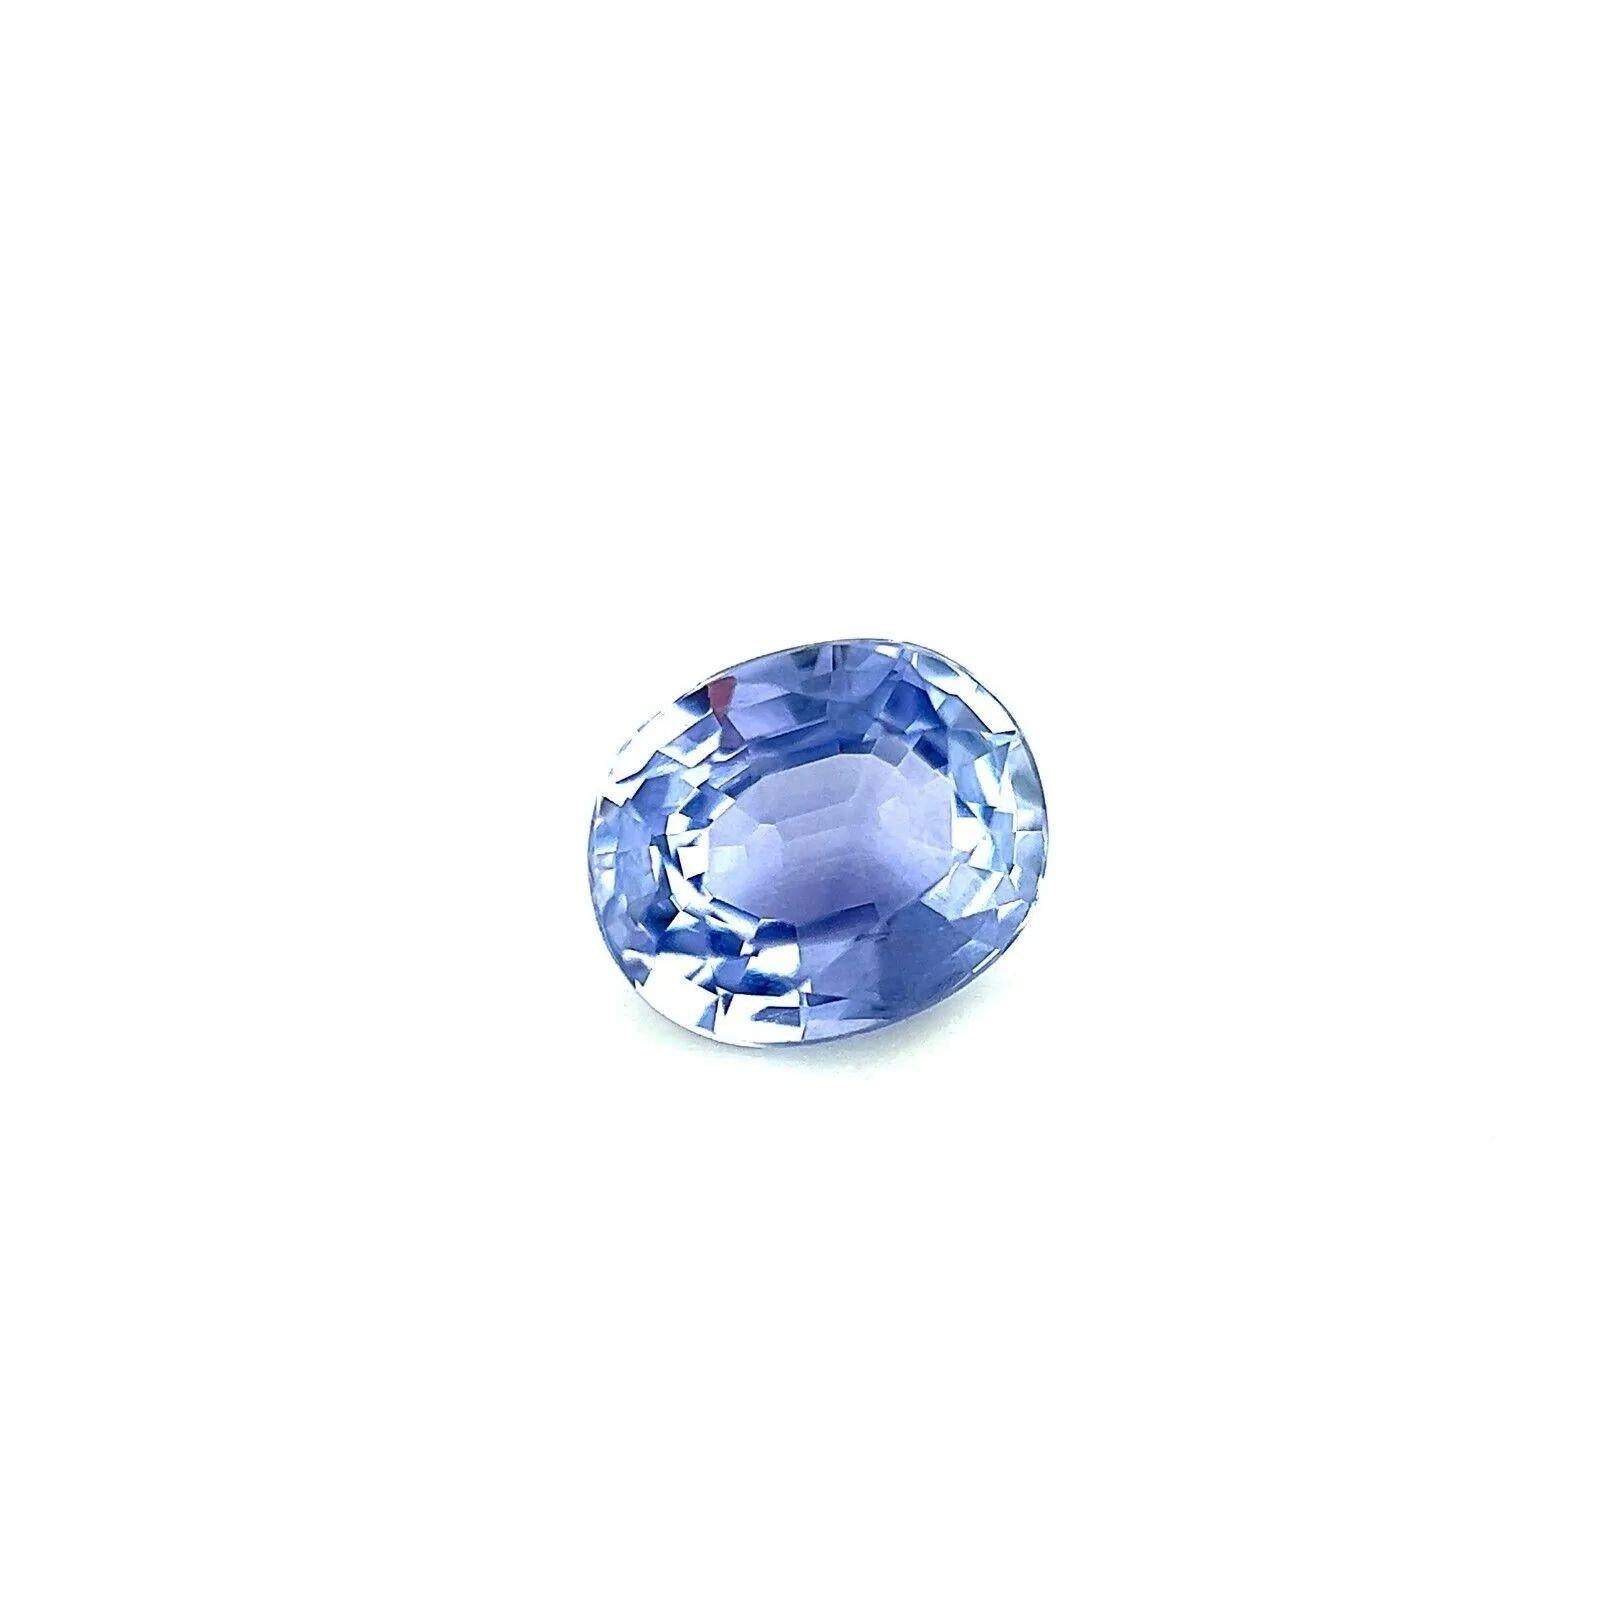 Unique Fine Ceylon Blue Violet Sapphire 0.82ct Oval Loose Cut Blue Rare 6x5mm VS

Unique Ceylon Violet Blue Sapphire Gemstone.
0.82ct Carat sapphire with a beautiful vivid violet blue colour.
Also has very good clarity, a very clean stone with only